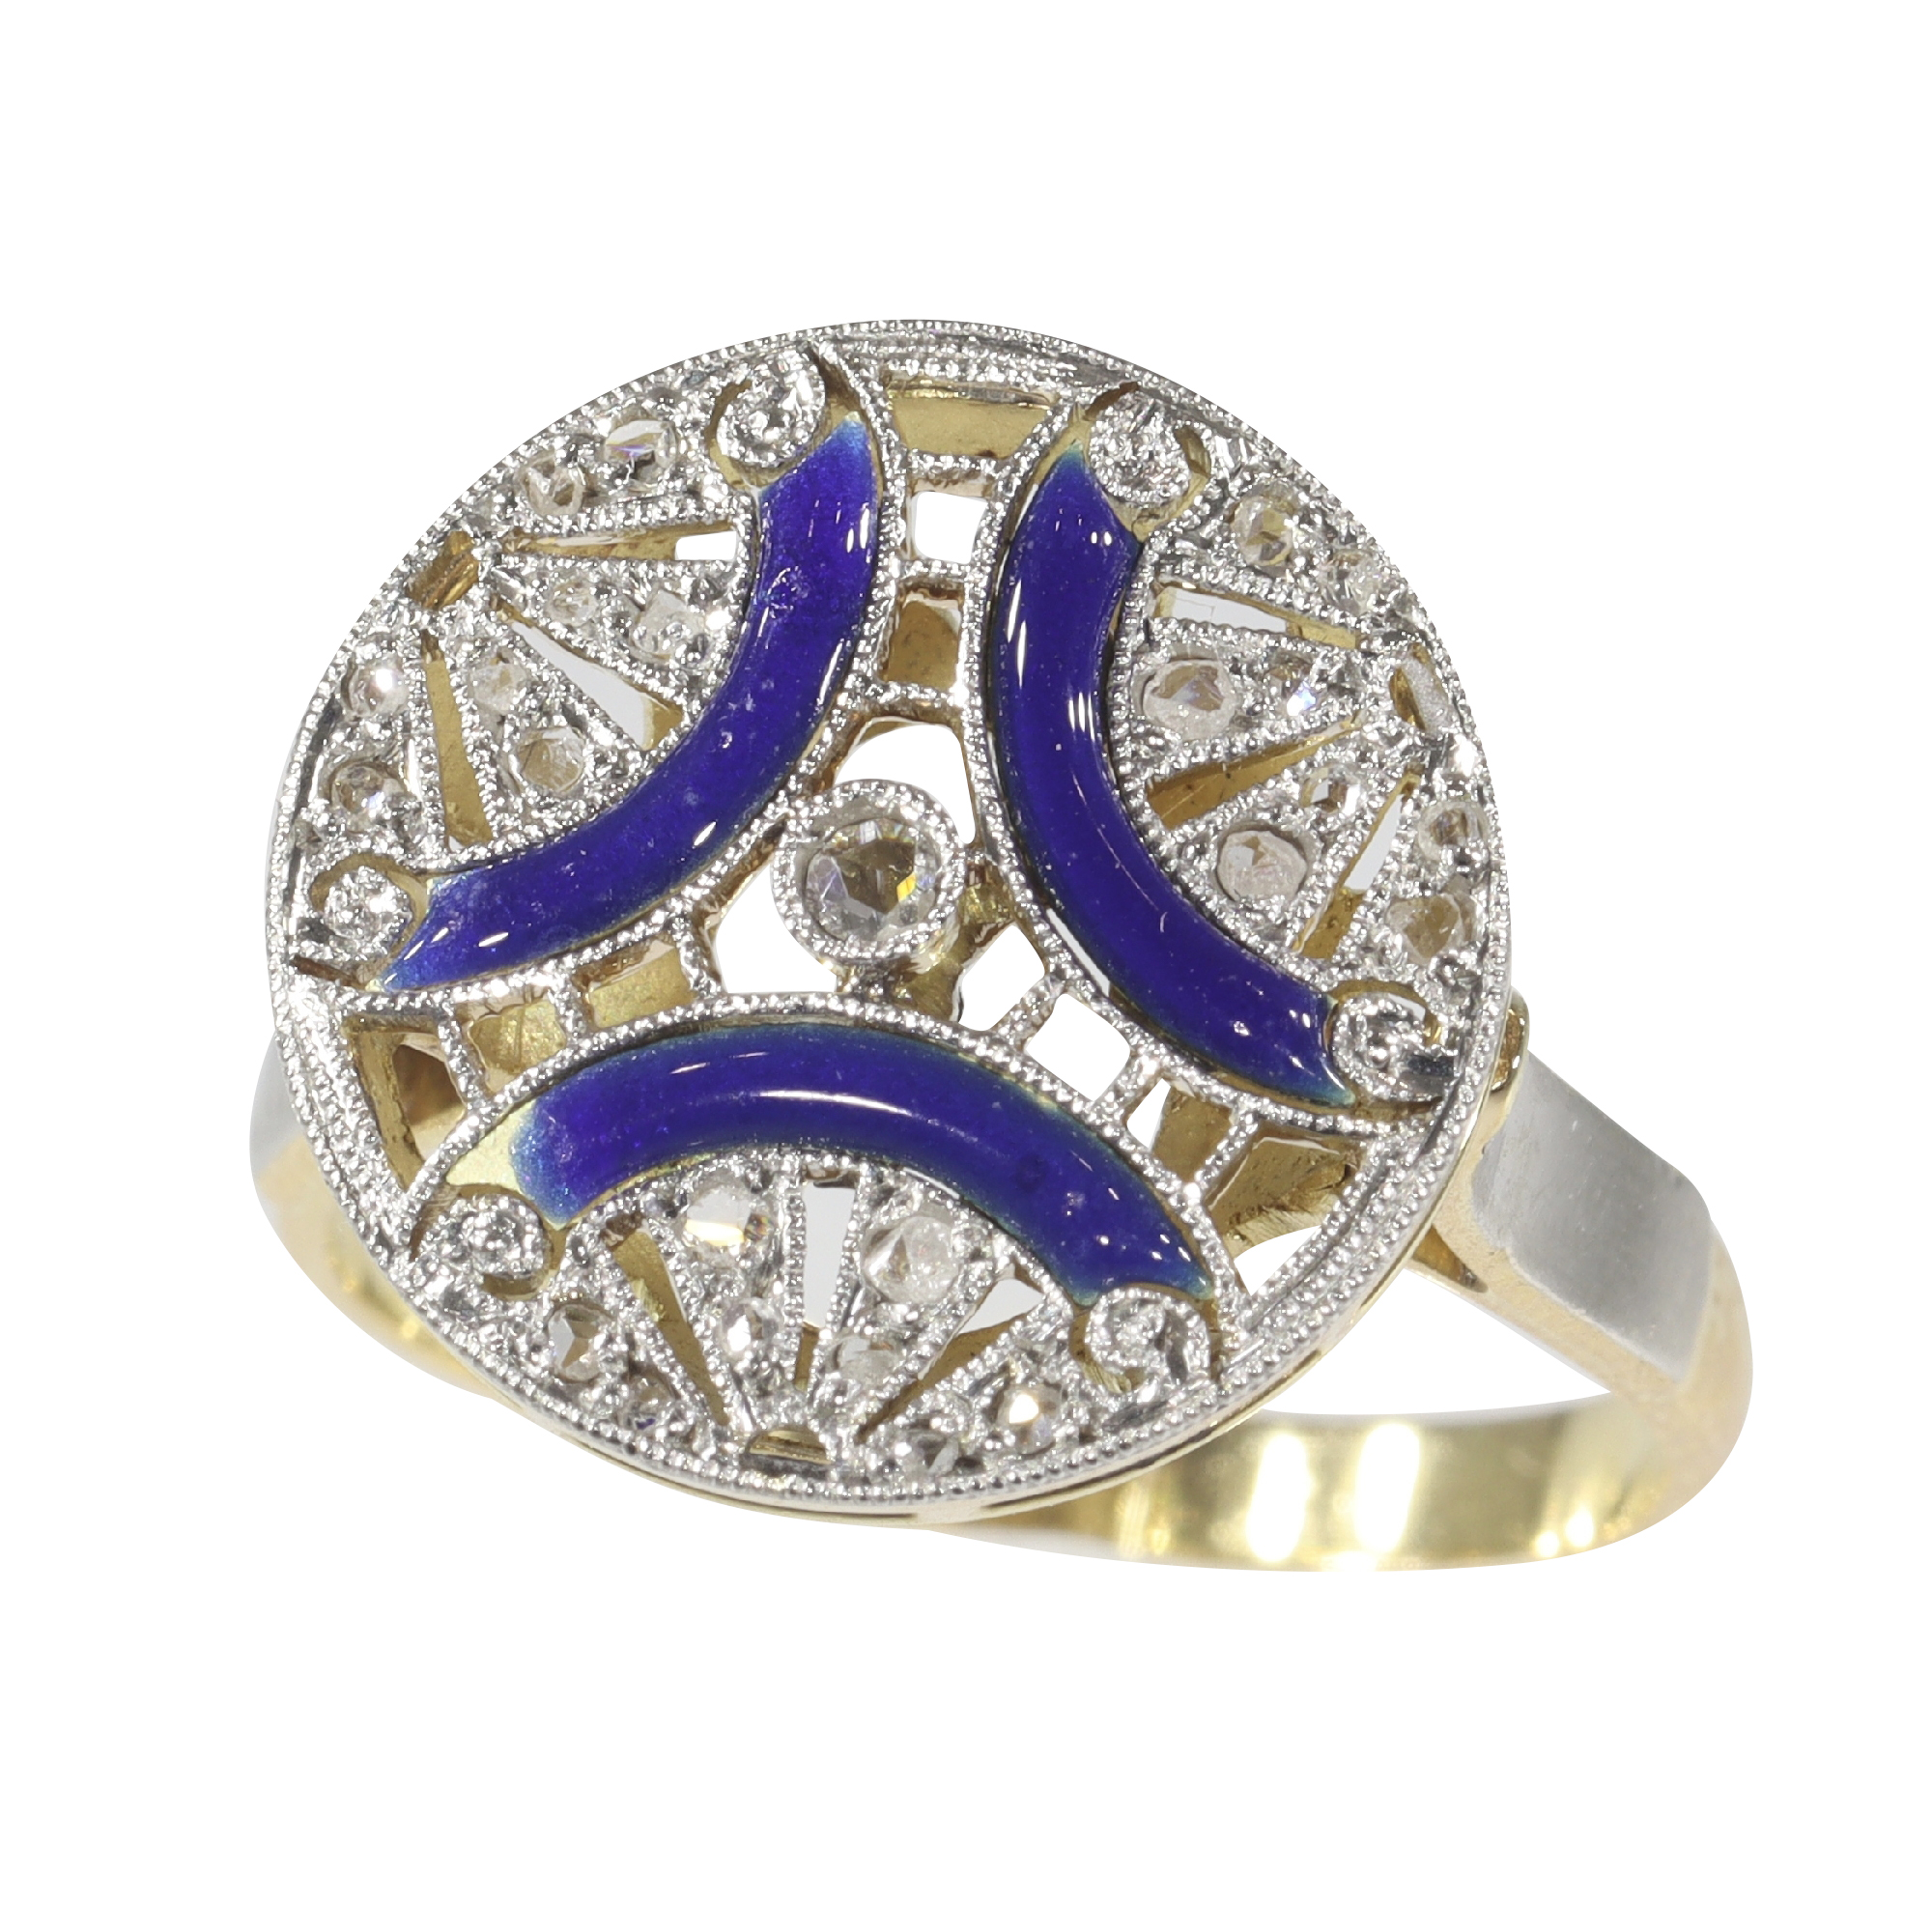 Vintage Art Deco diamond engagement ring with blue enamel